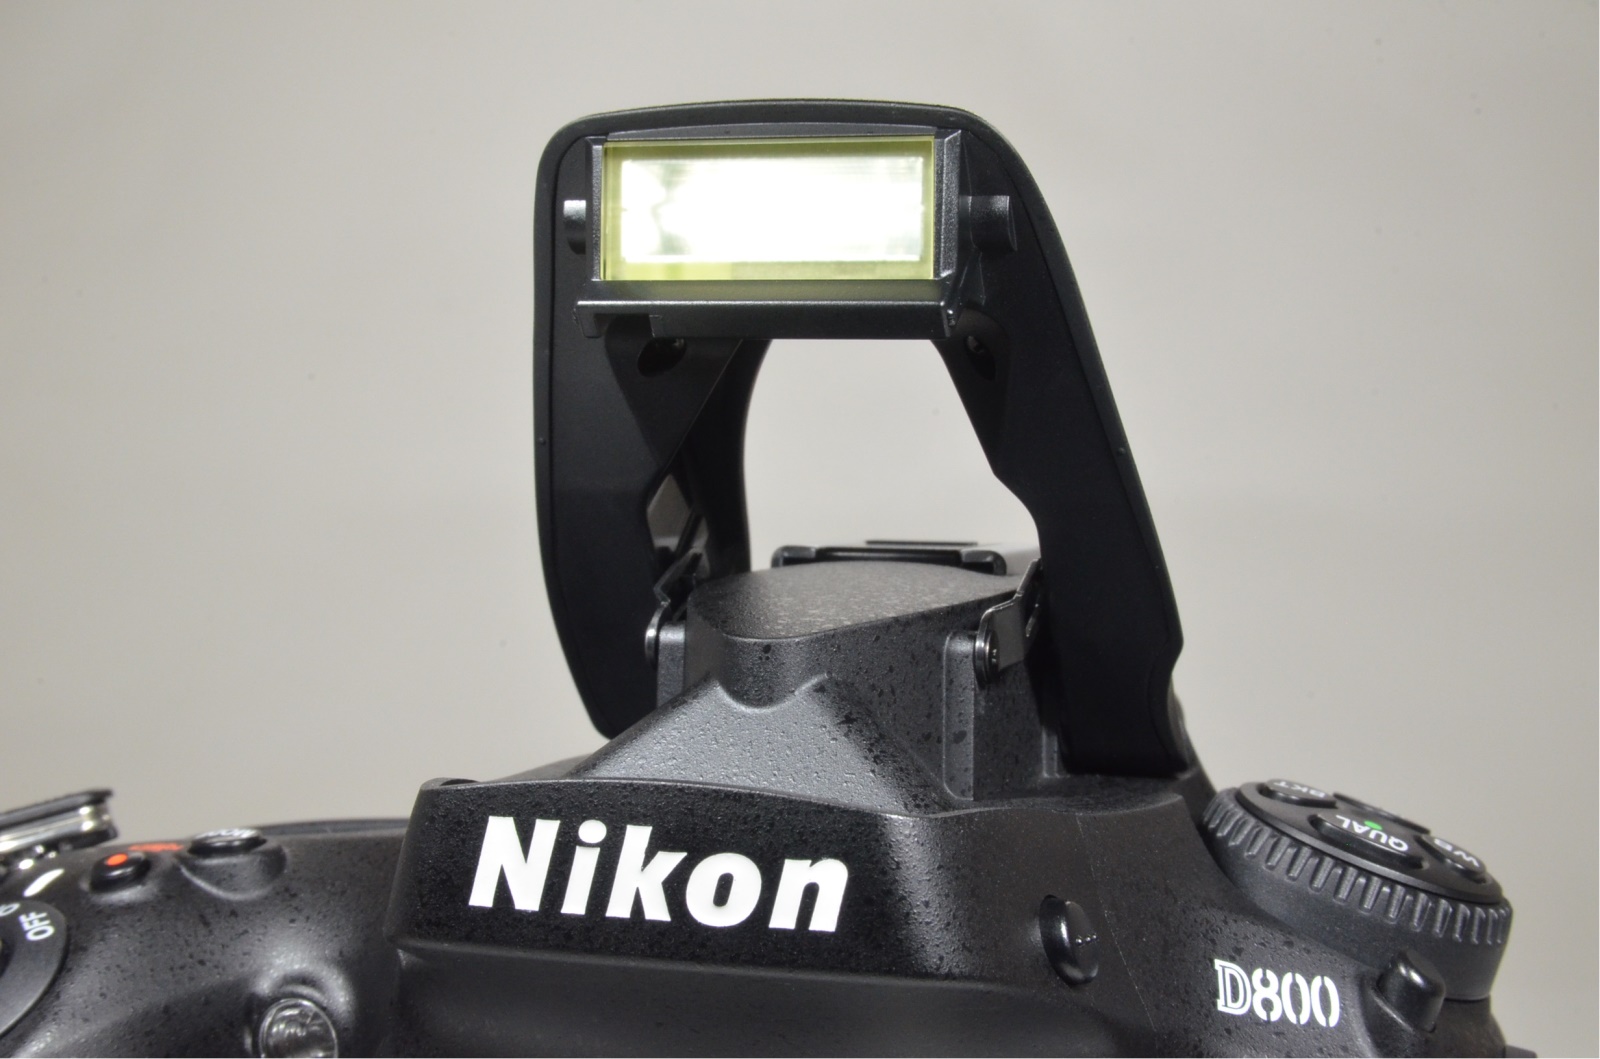 nikon d800 36.3mp digital slr camera shutter count 2135 from japan